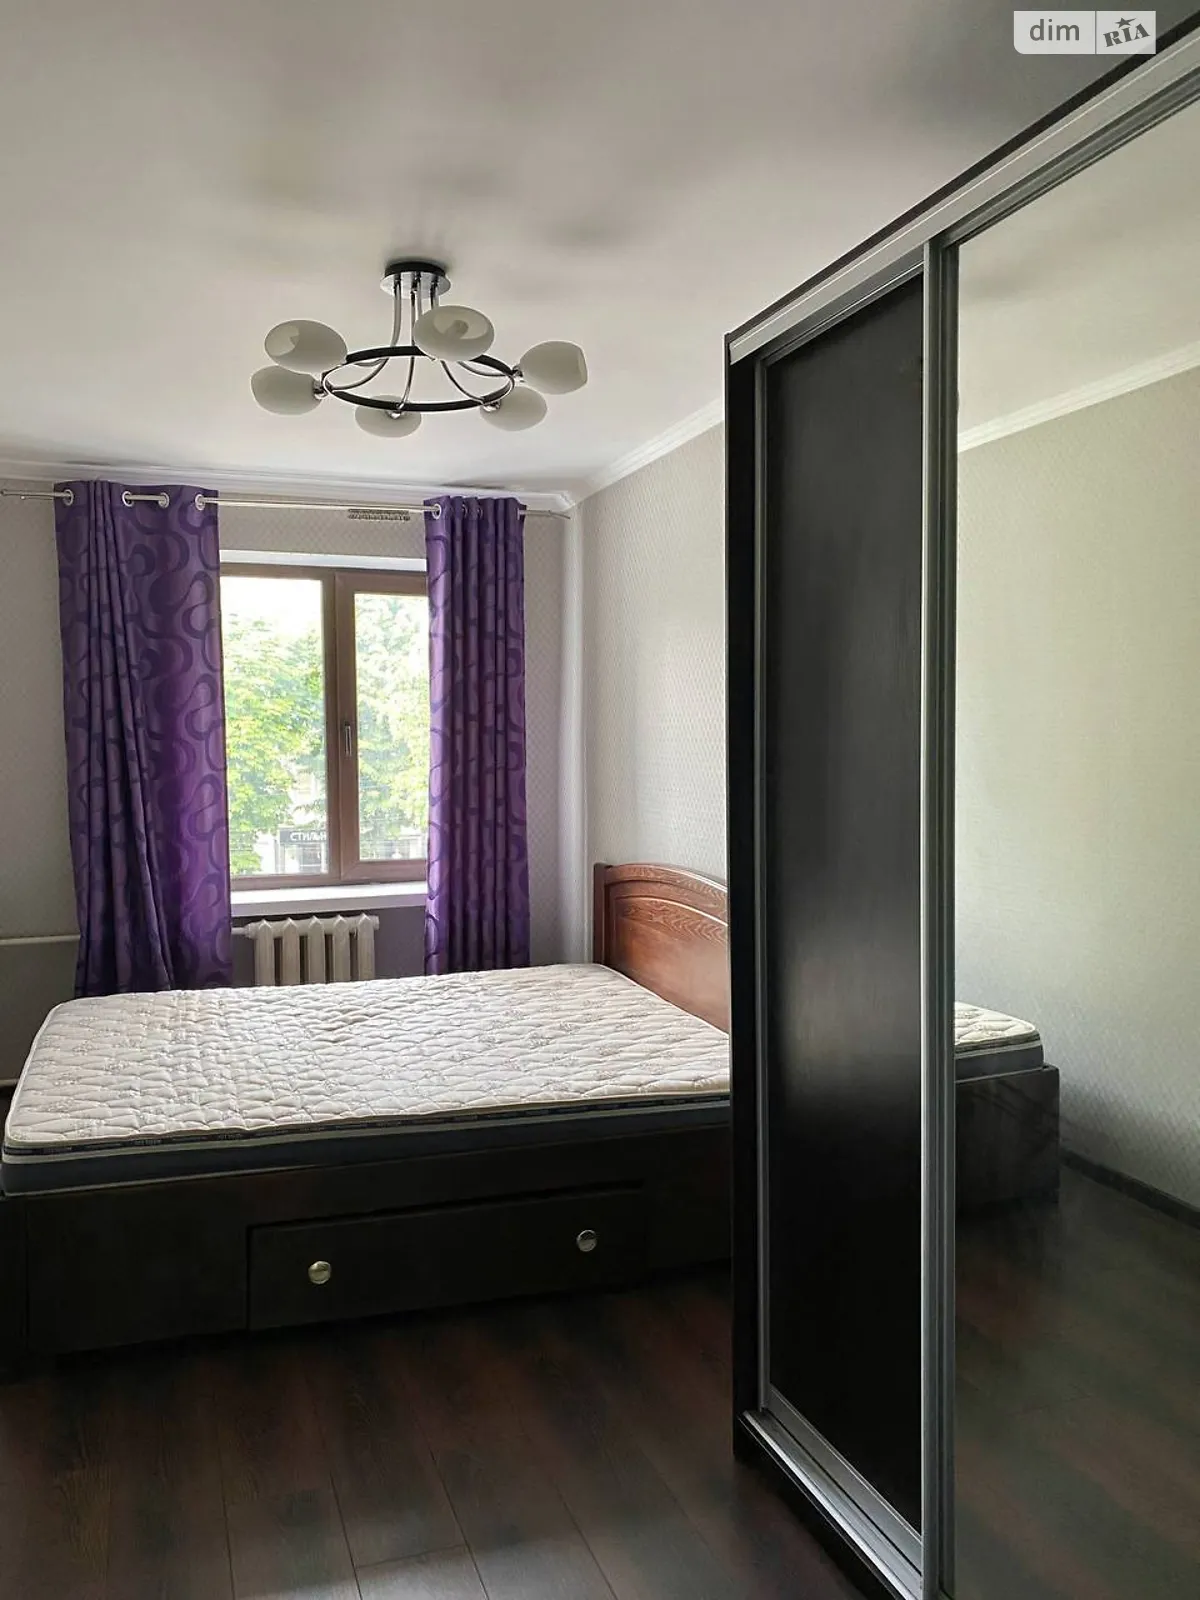 2-кімнатна квартира 42.4 кв. м у Луцьку - фото 3